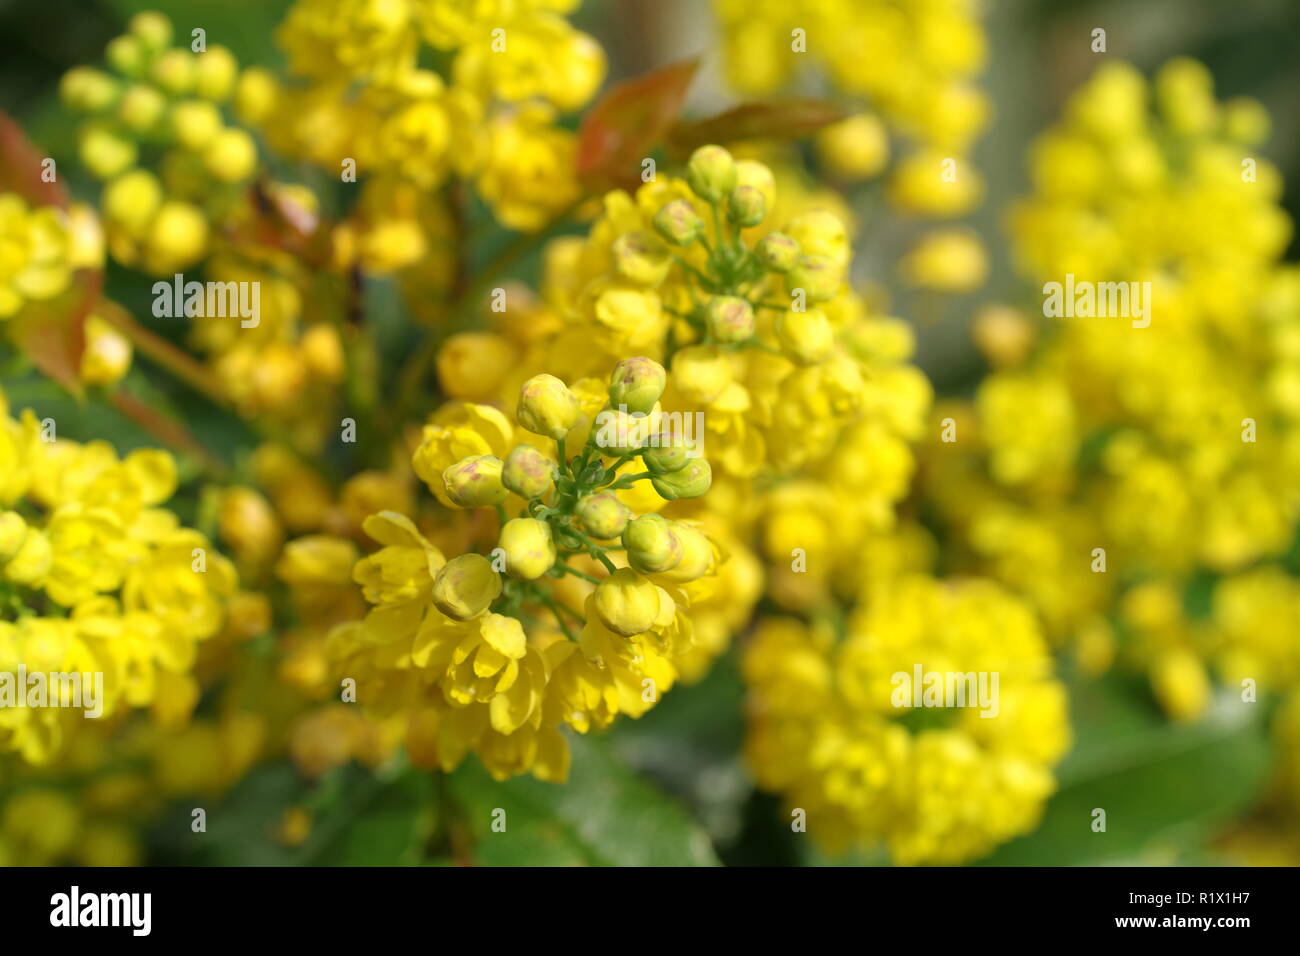 mahonia aquifolium oregon grape with yellow flowers Stock Photo